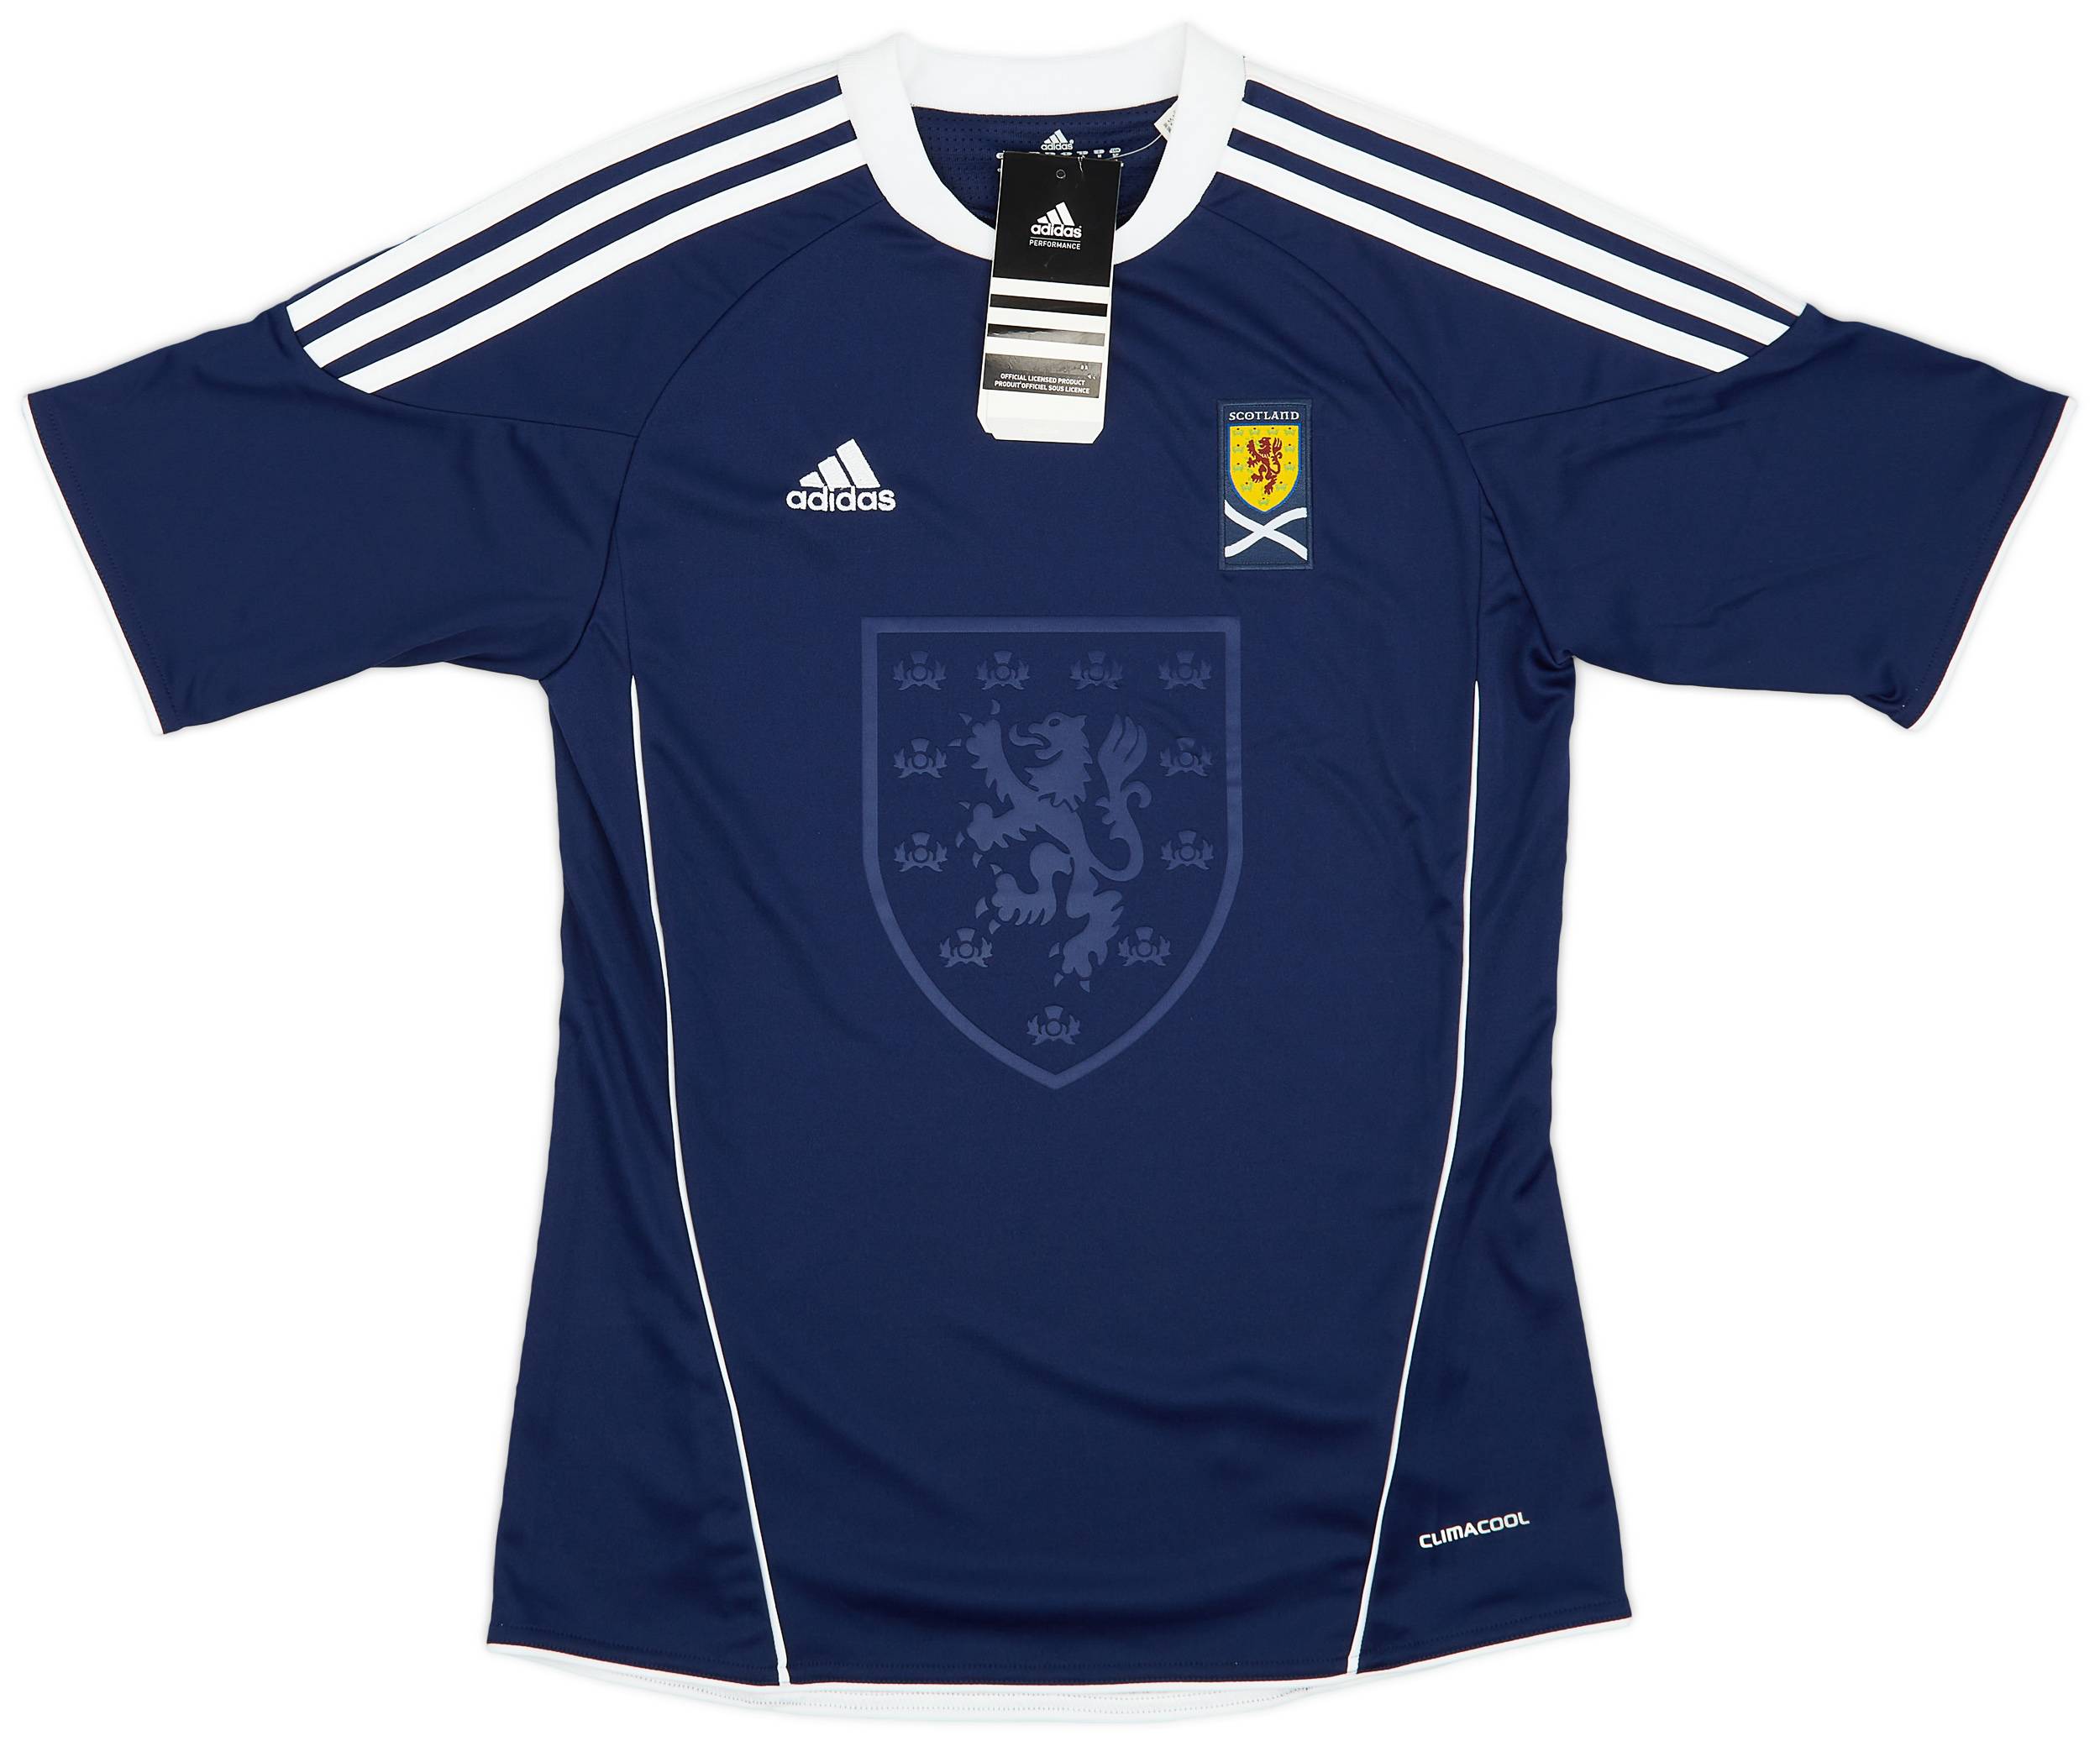 2010-11 Scotland Home Shirt (Women's S)